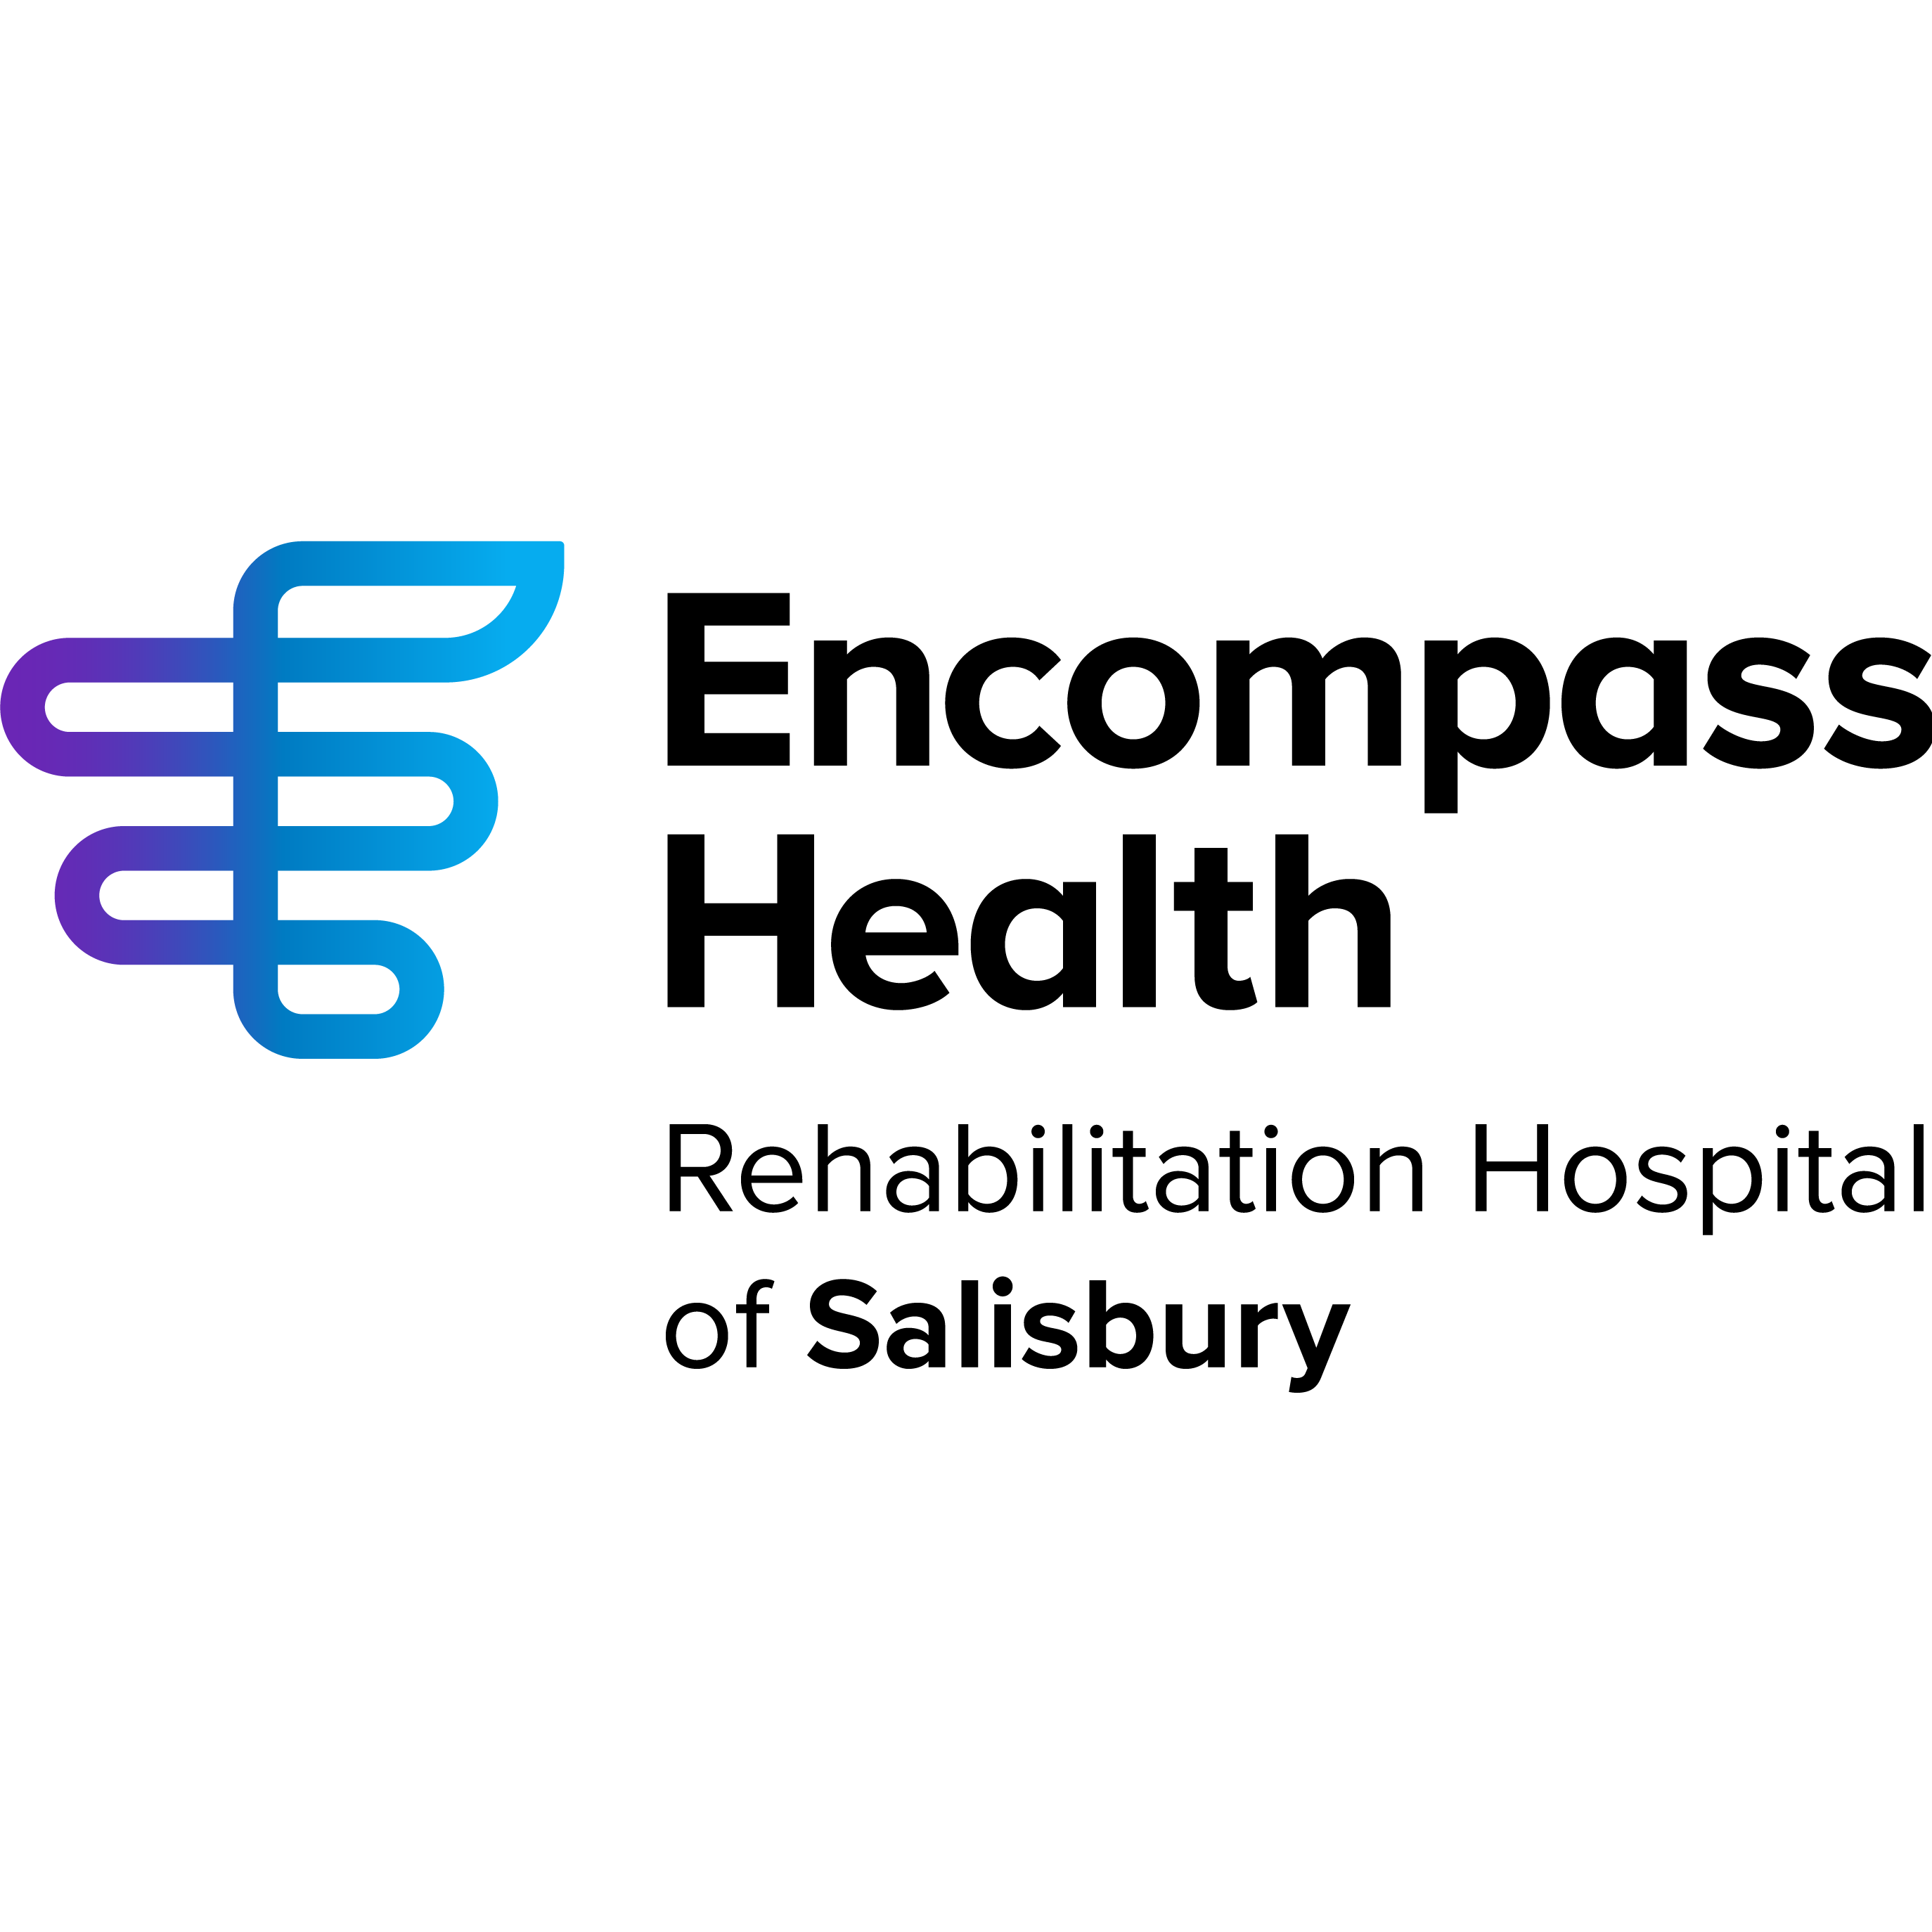 Encompass Health Rehabilitation Hospital of Salisbury